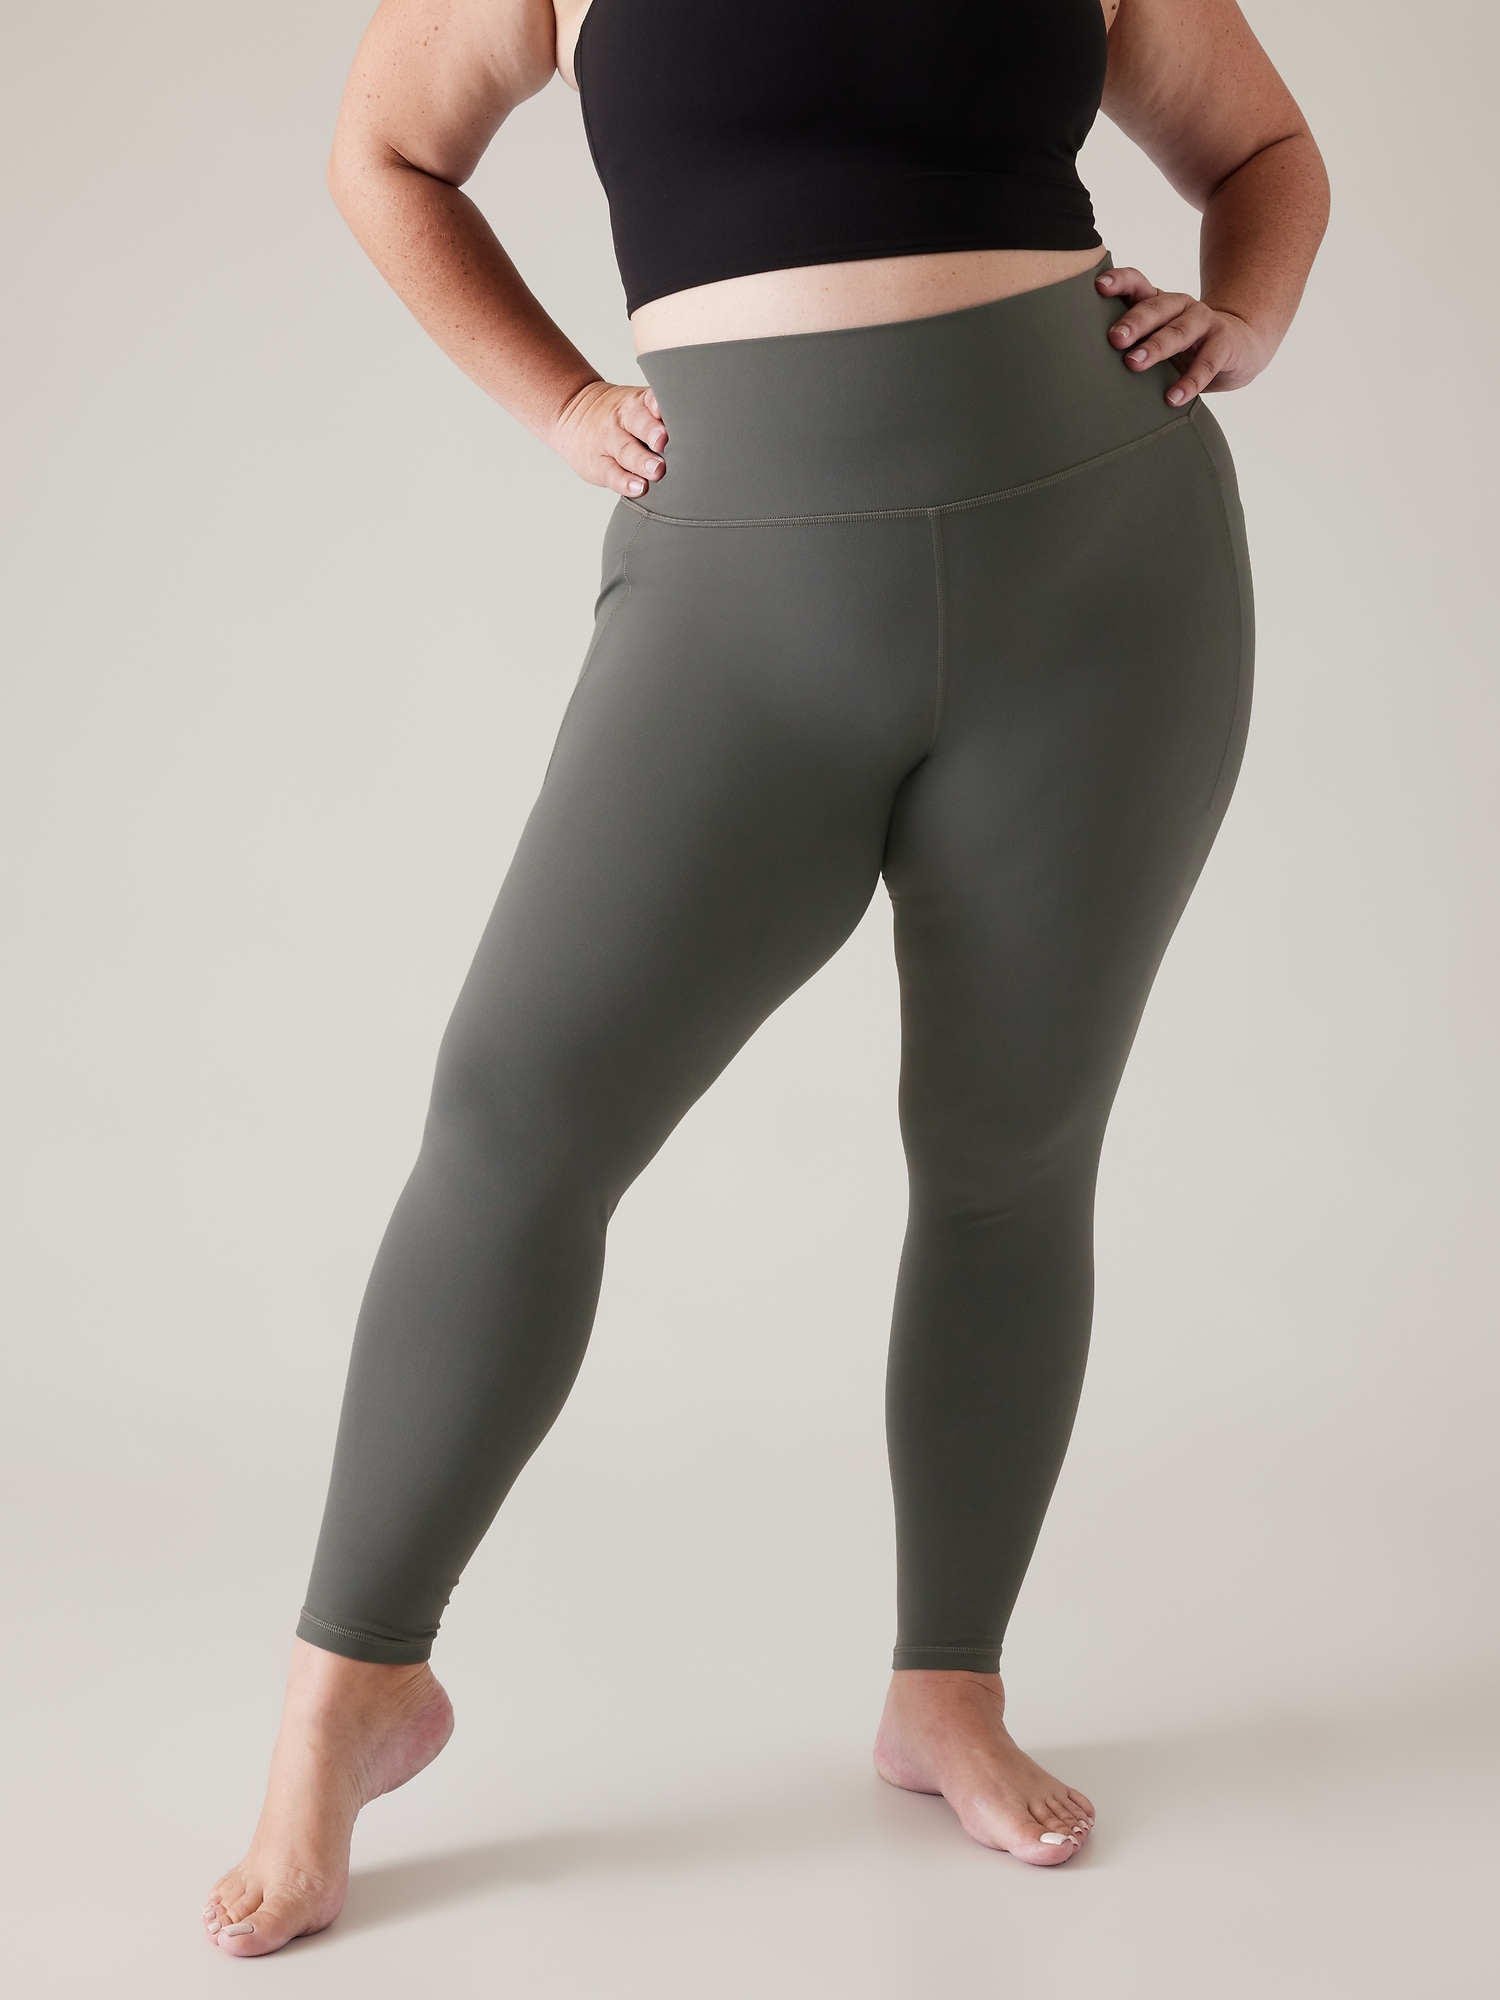 L 128 Spandex High Quality New Women Yoga Pants Solid Black Sports